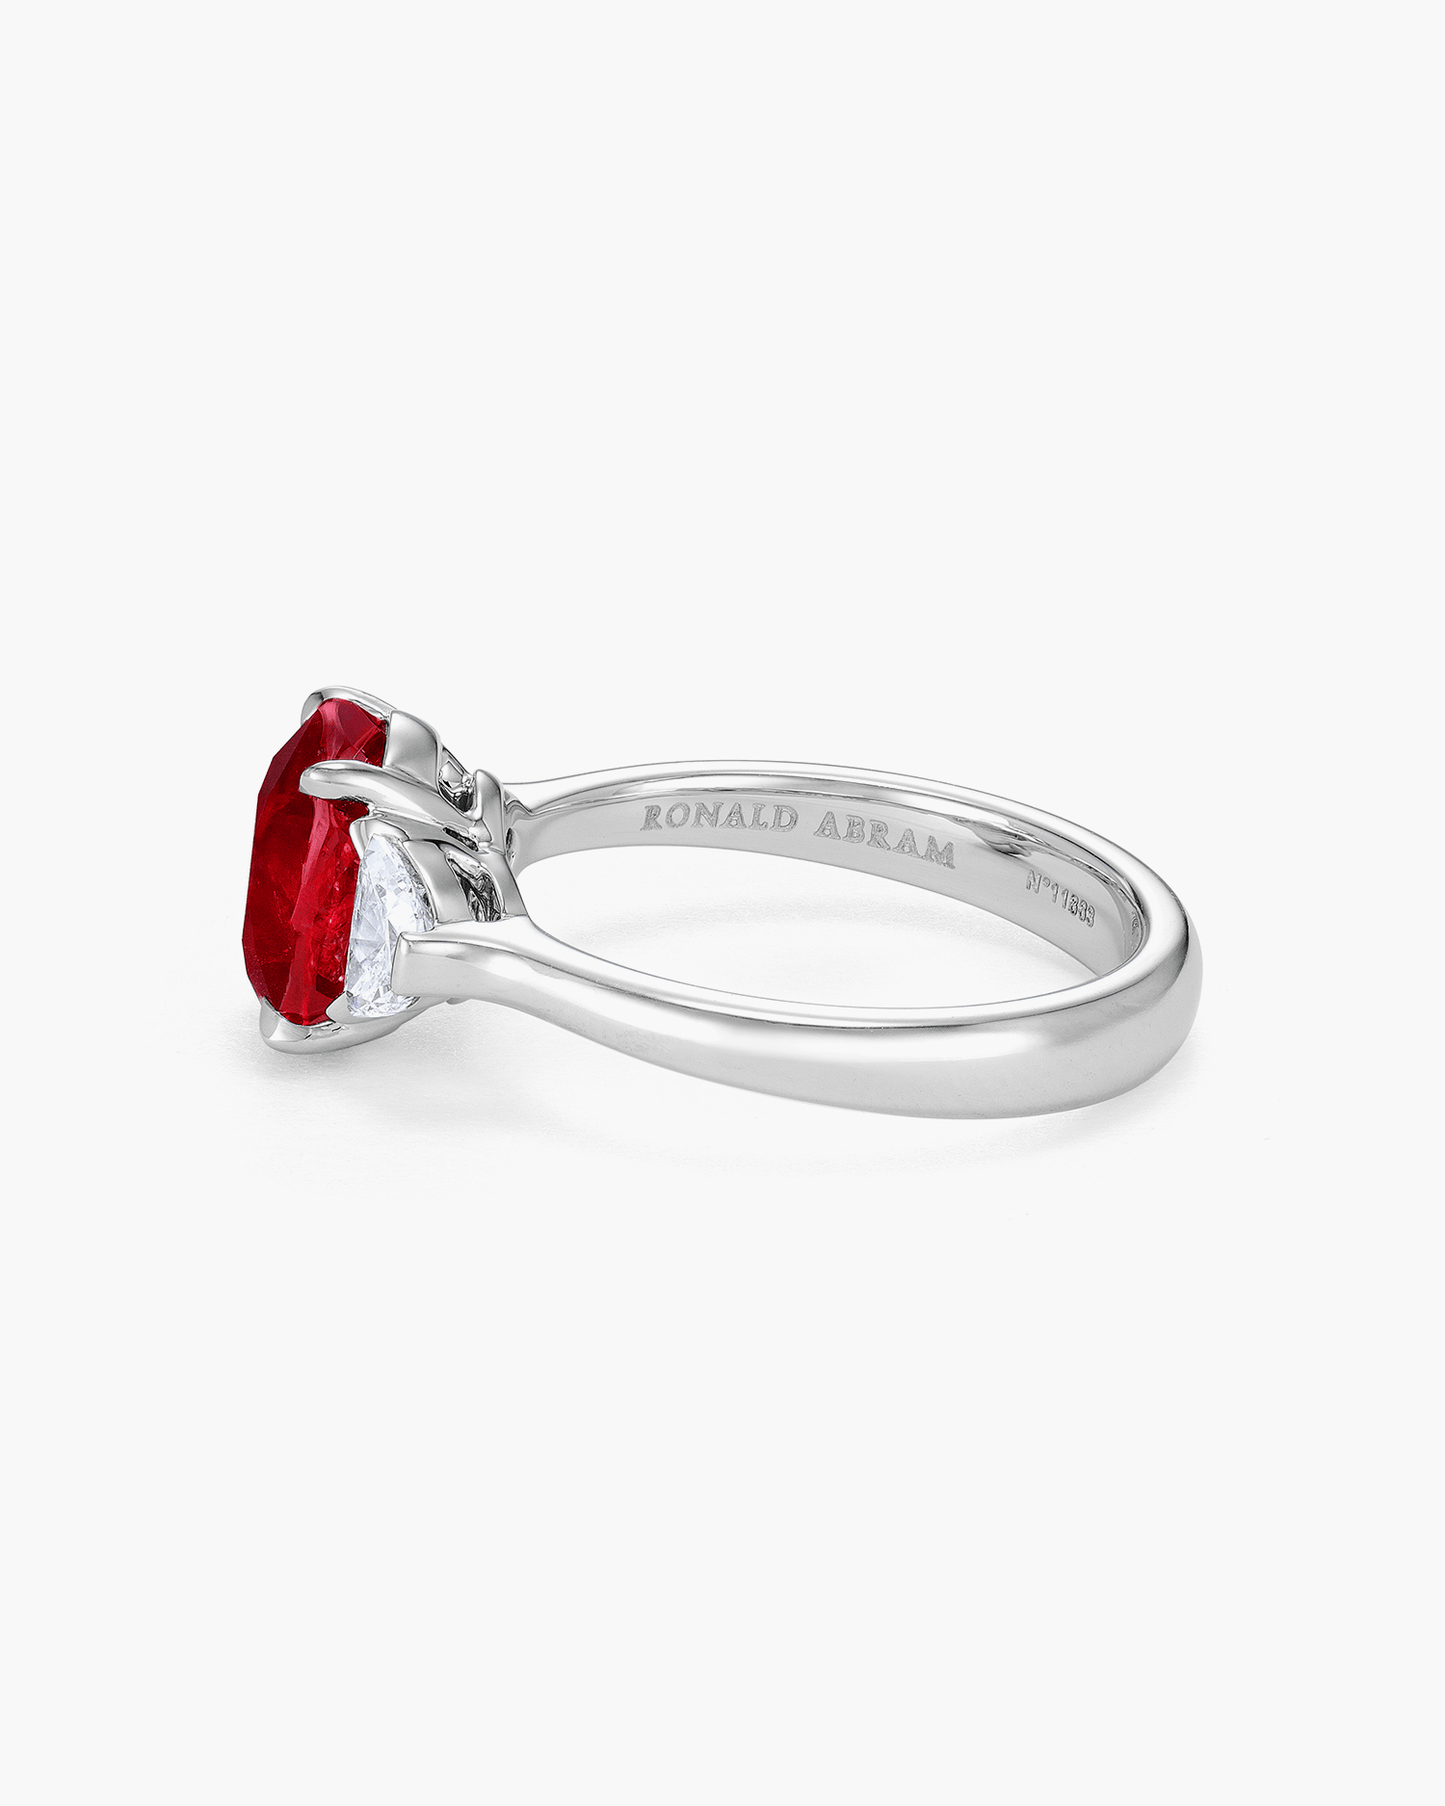 3.07 carat Oval Shape Burmese Ruby and Diamond Ring